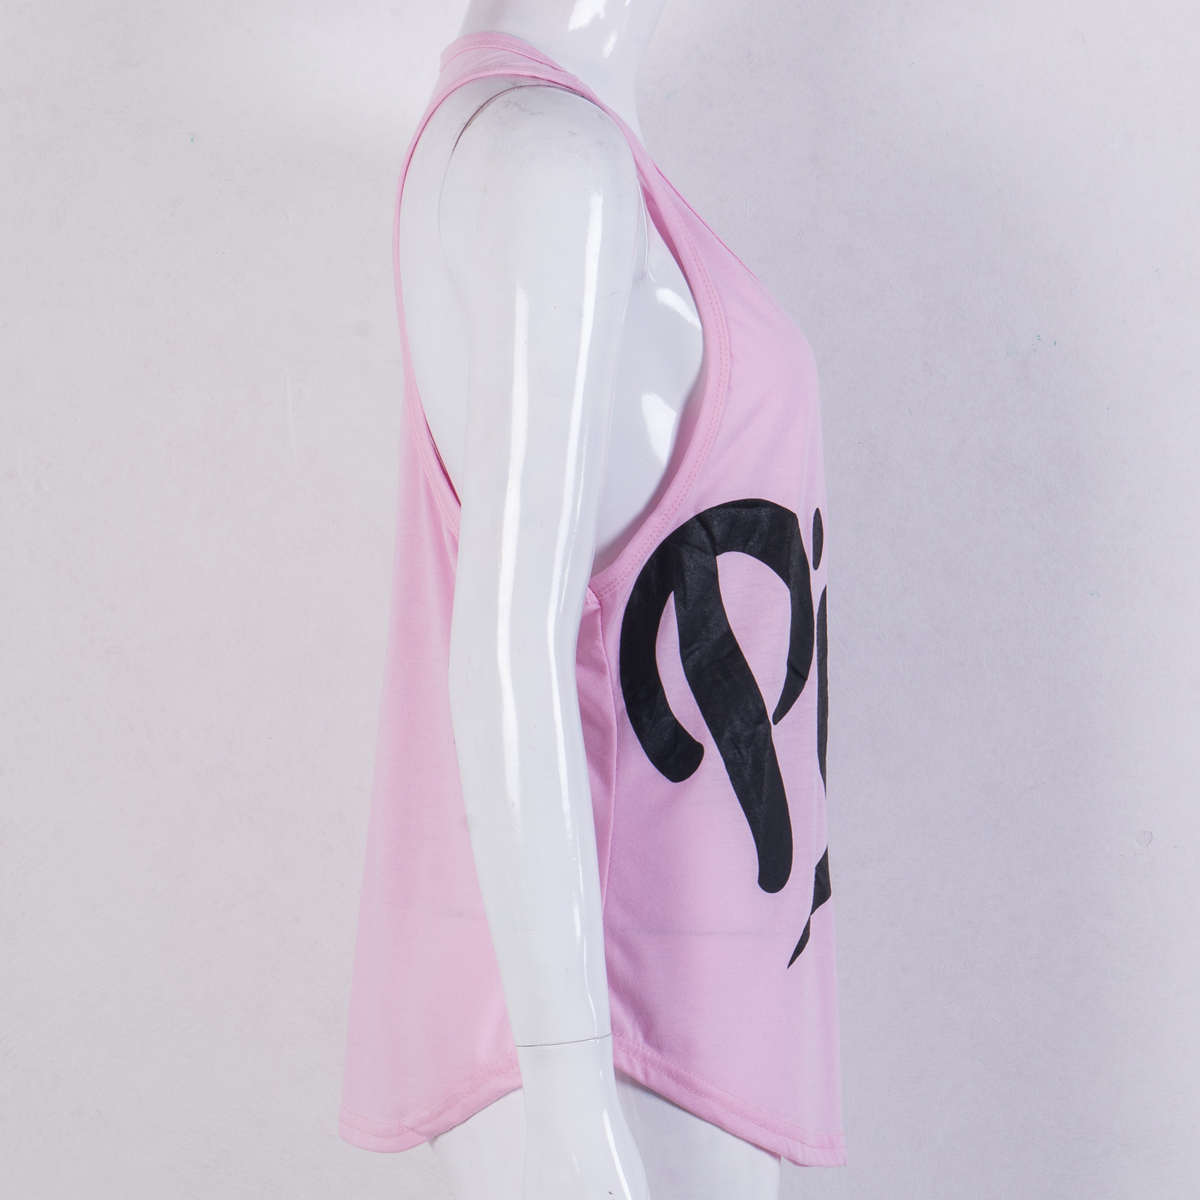 Hirigin New Women Yoga Vest Fitness Stretch Workout Sleeveless Tank Tops Summer Casual Loose Pink Love Letter Sportswear